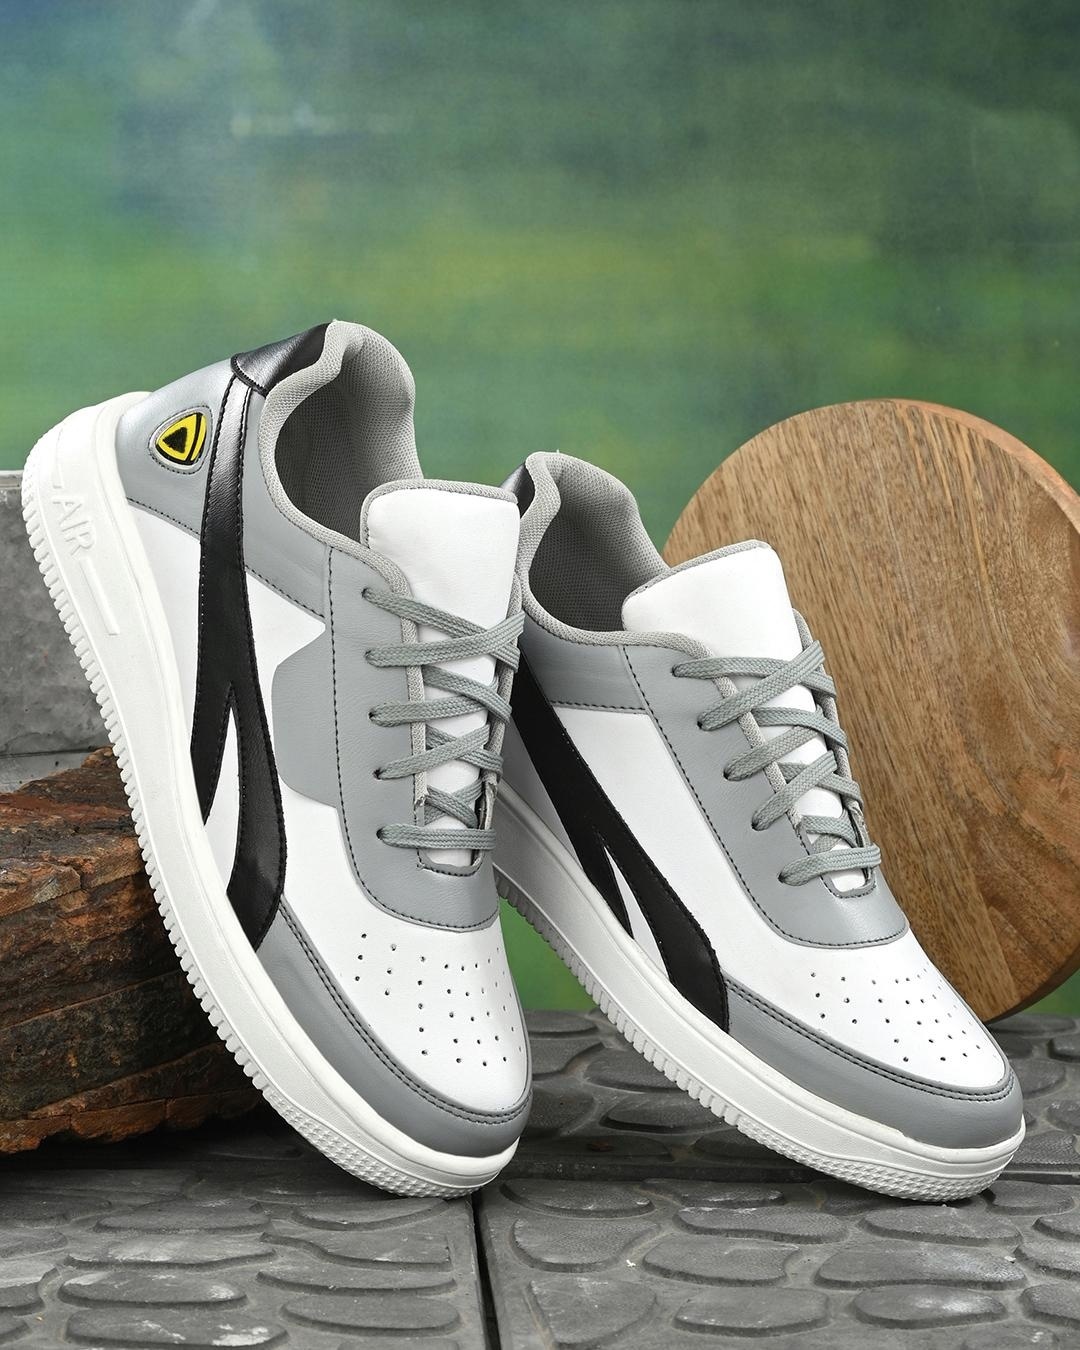 Buy Puma Mens DISRIDE Gray Tile-White Sneaker - 6 UK (39275902) at Amazon.in